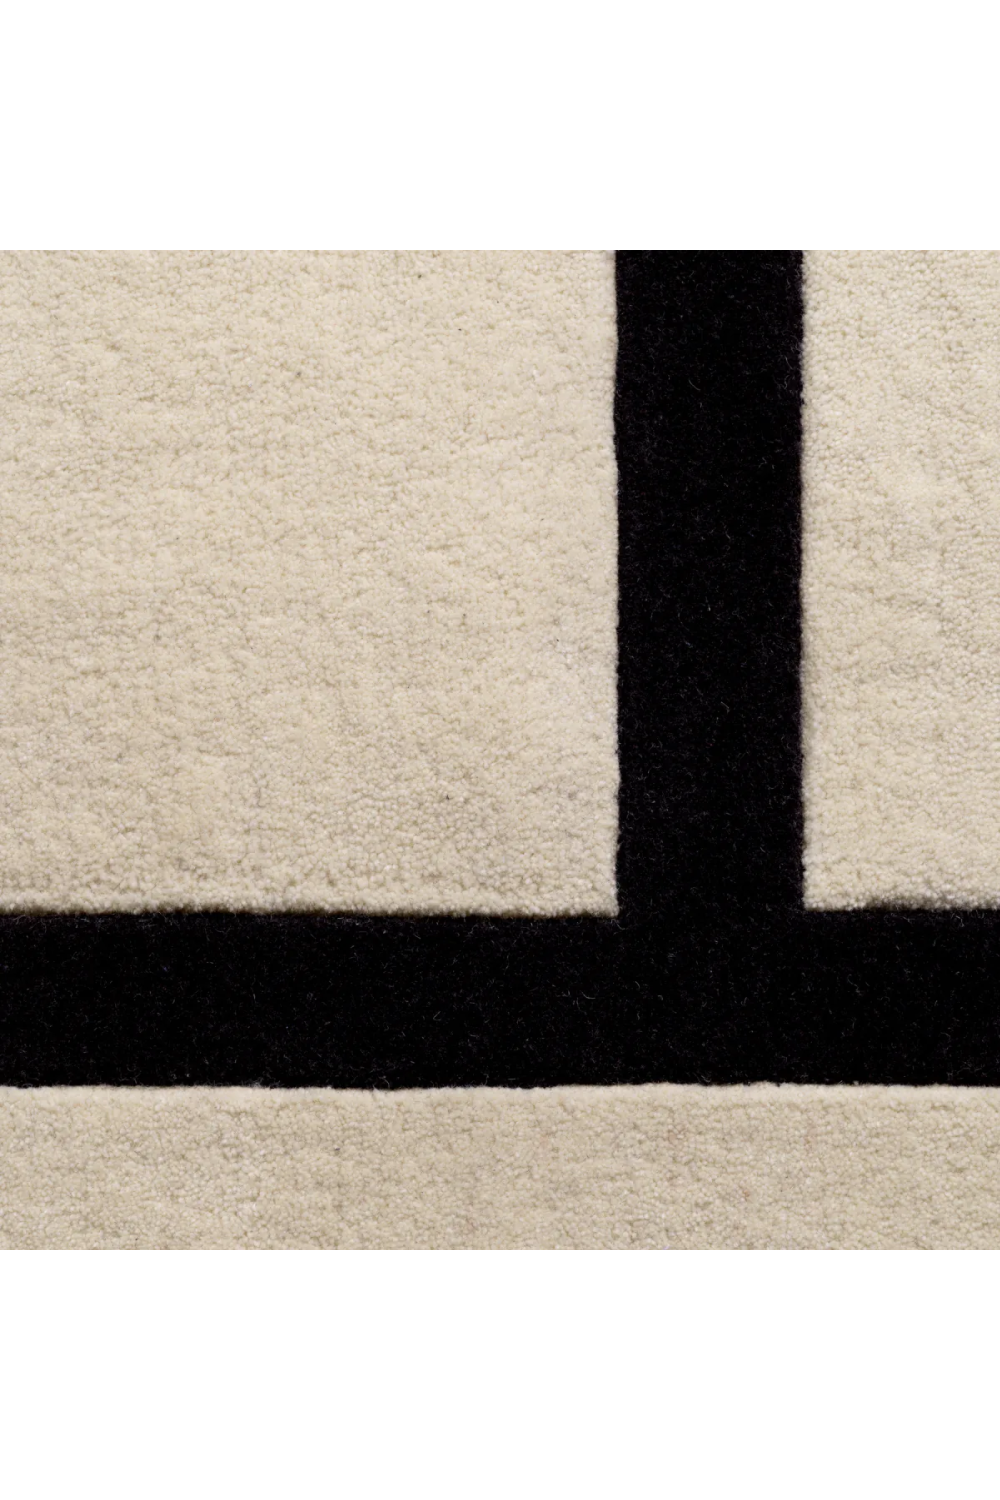 Off White Geometrical Wool Rug 10' x 13' | Eichholtz Omar | Oroa.com